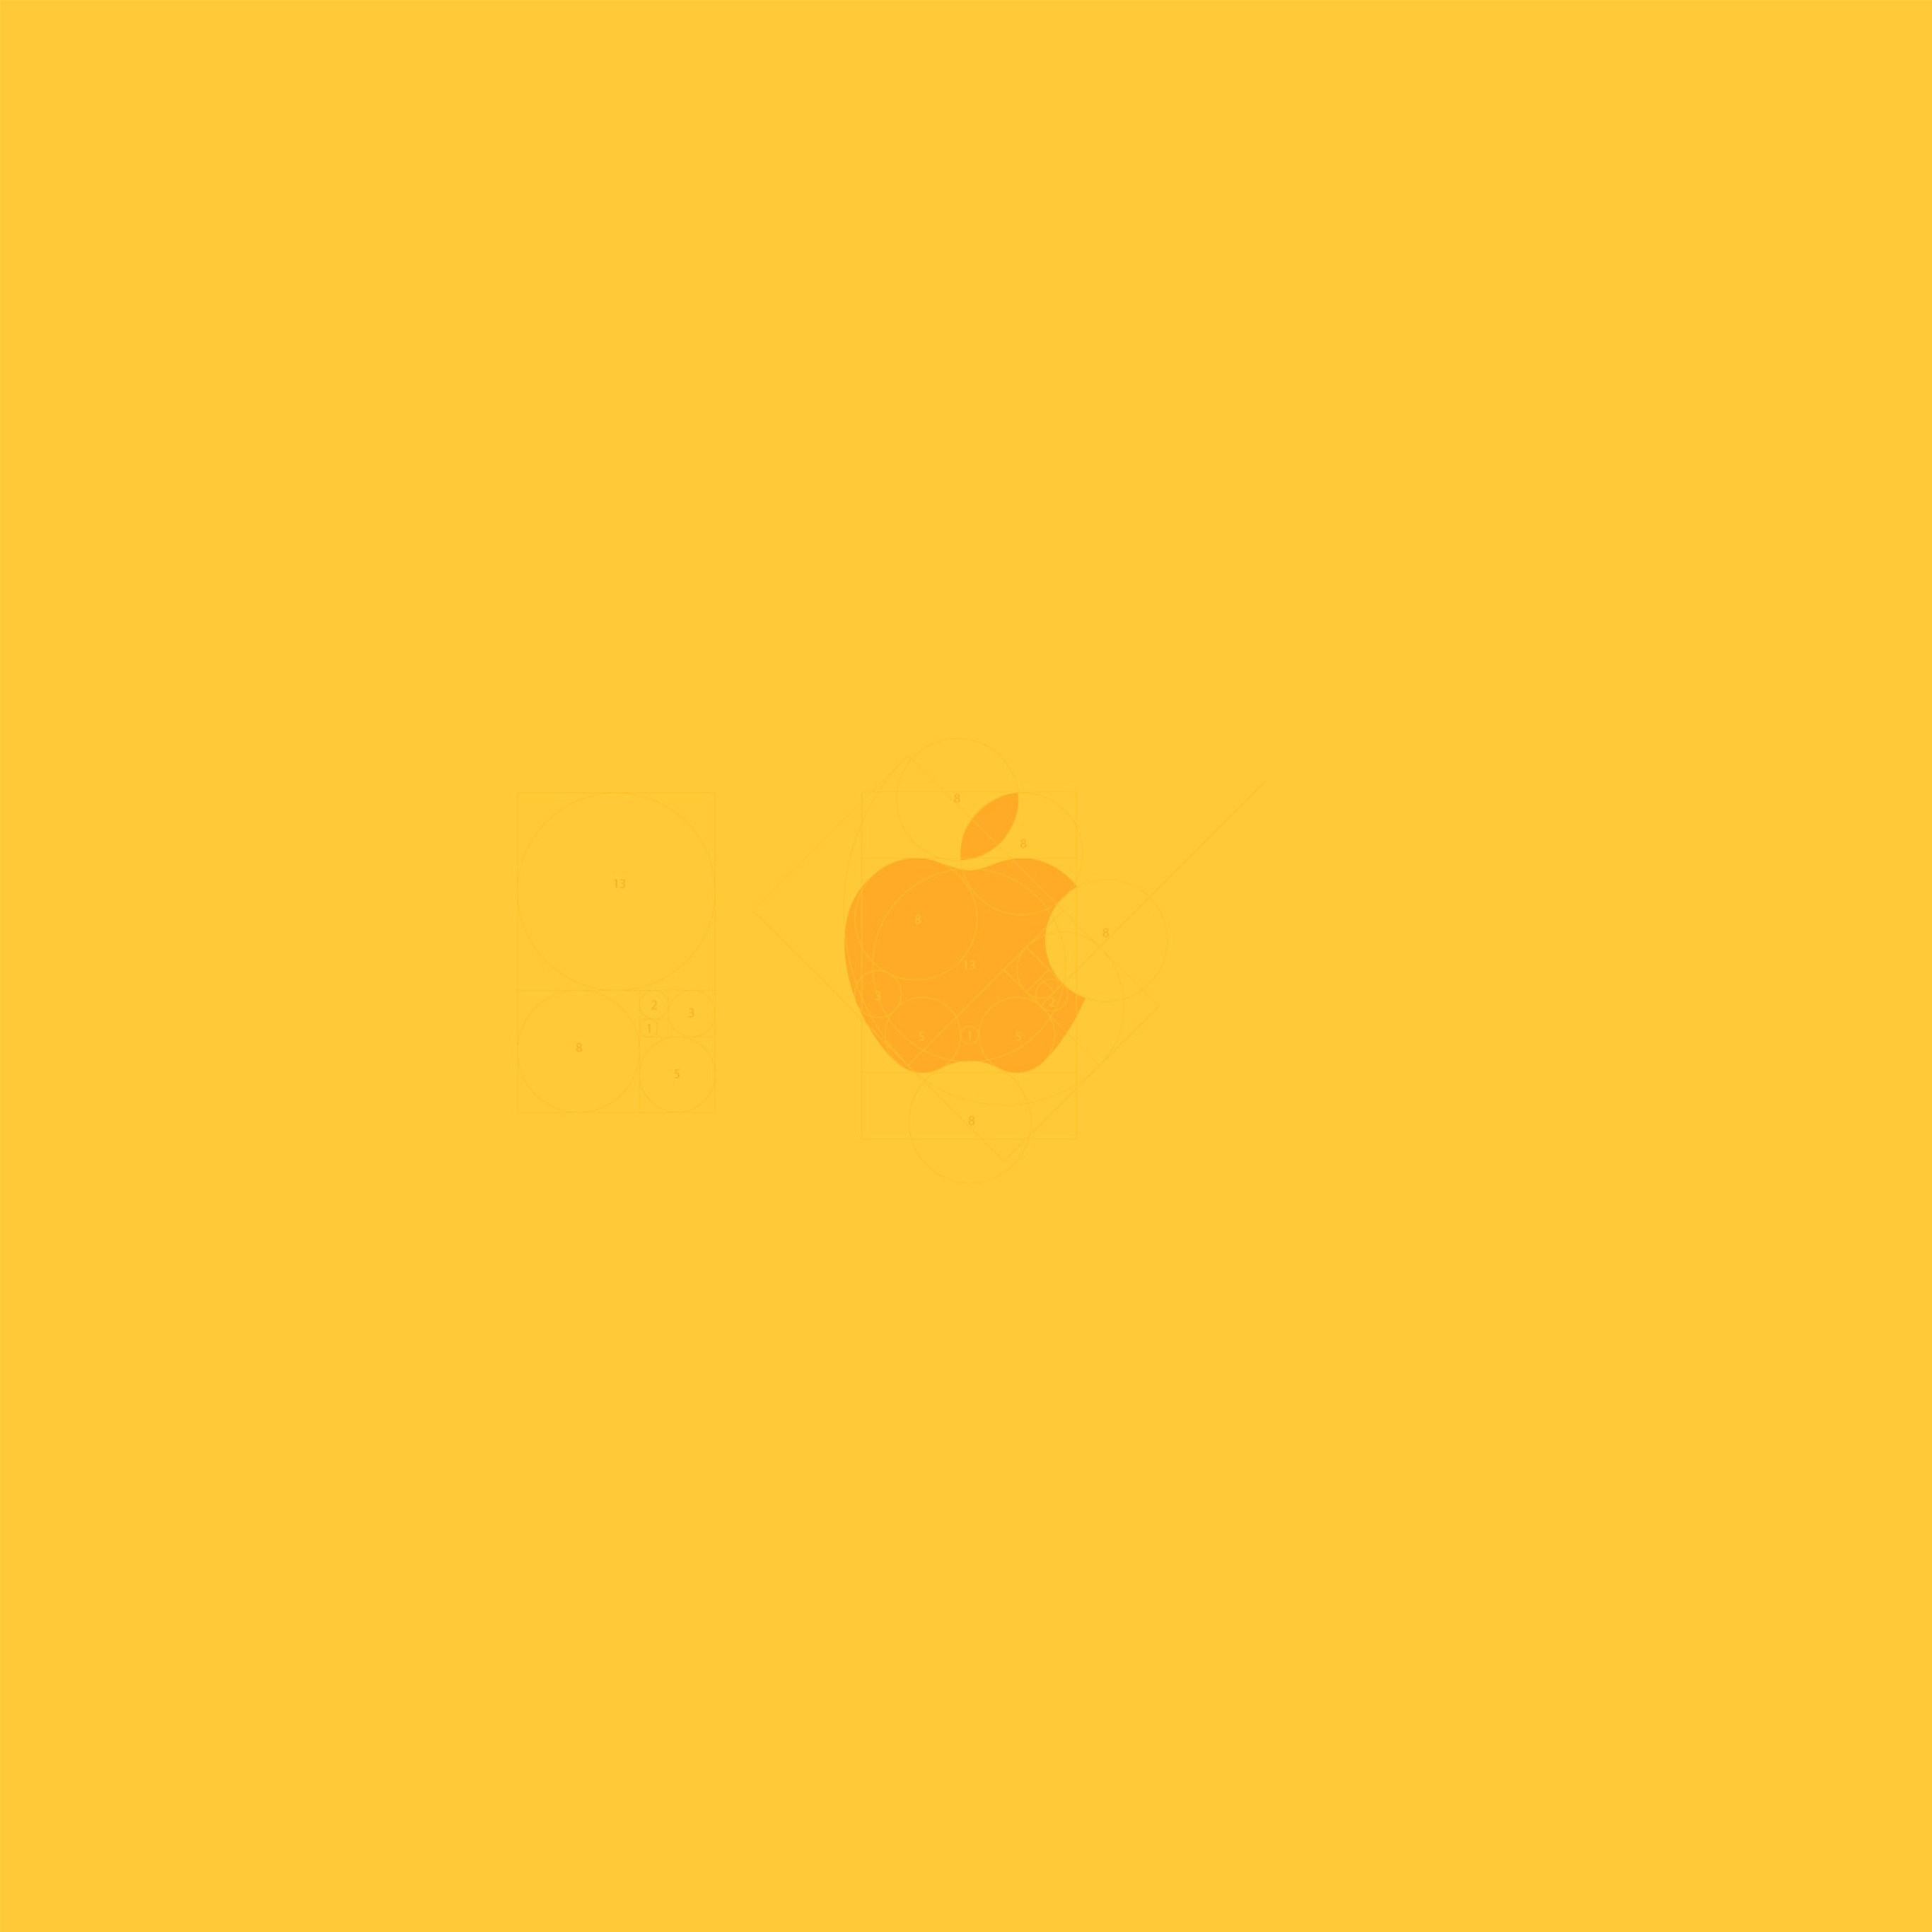 iPad ProApple Logo 2732x2732